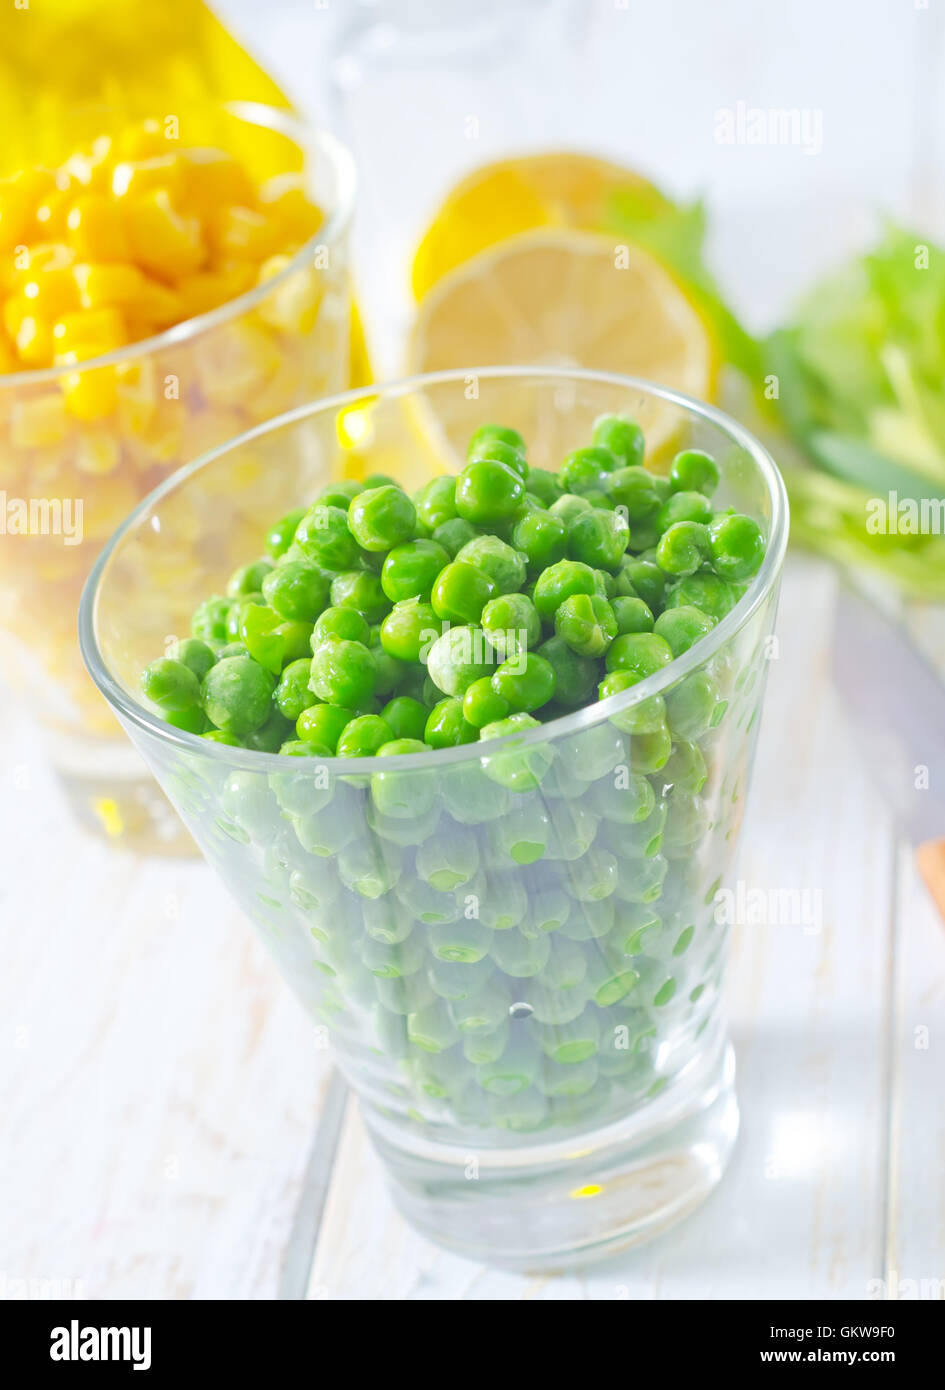 corn and peas Stock Photo